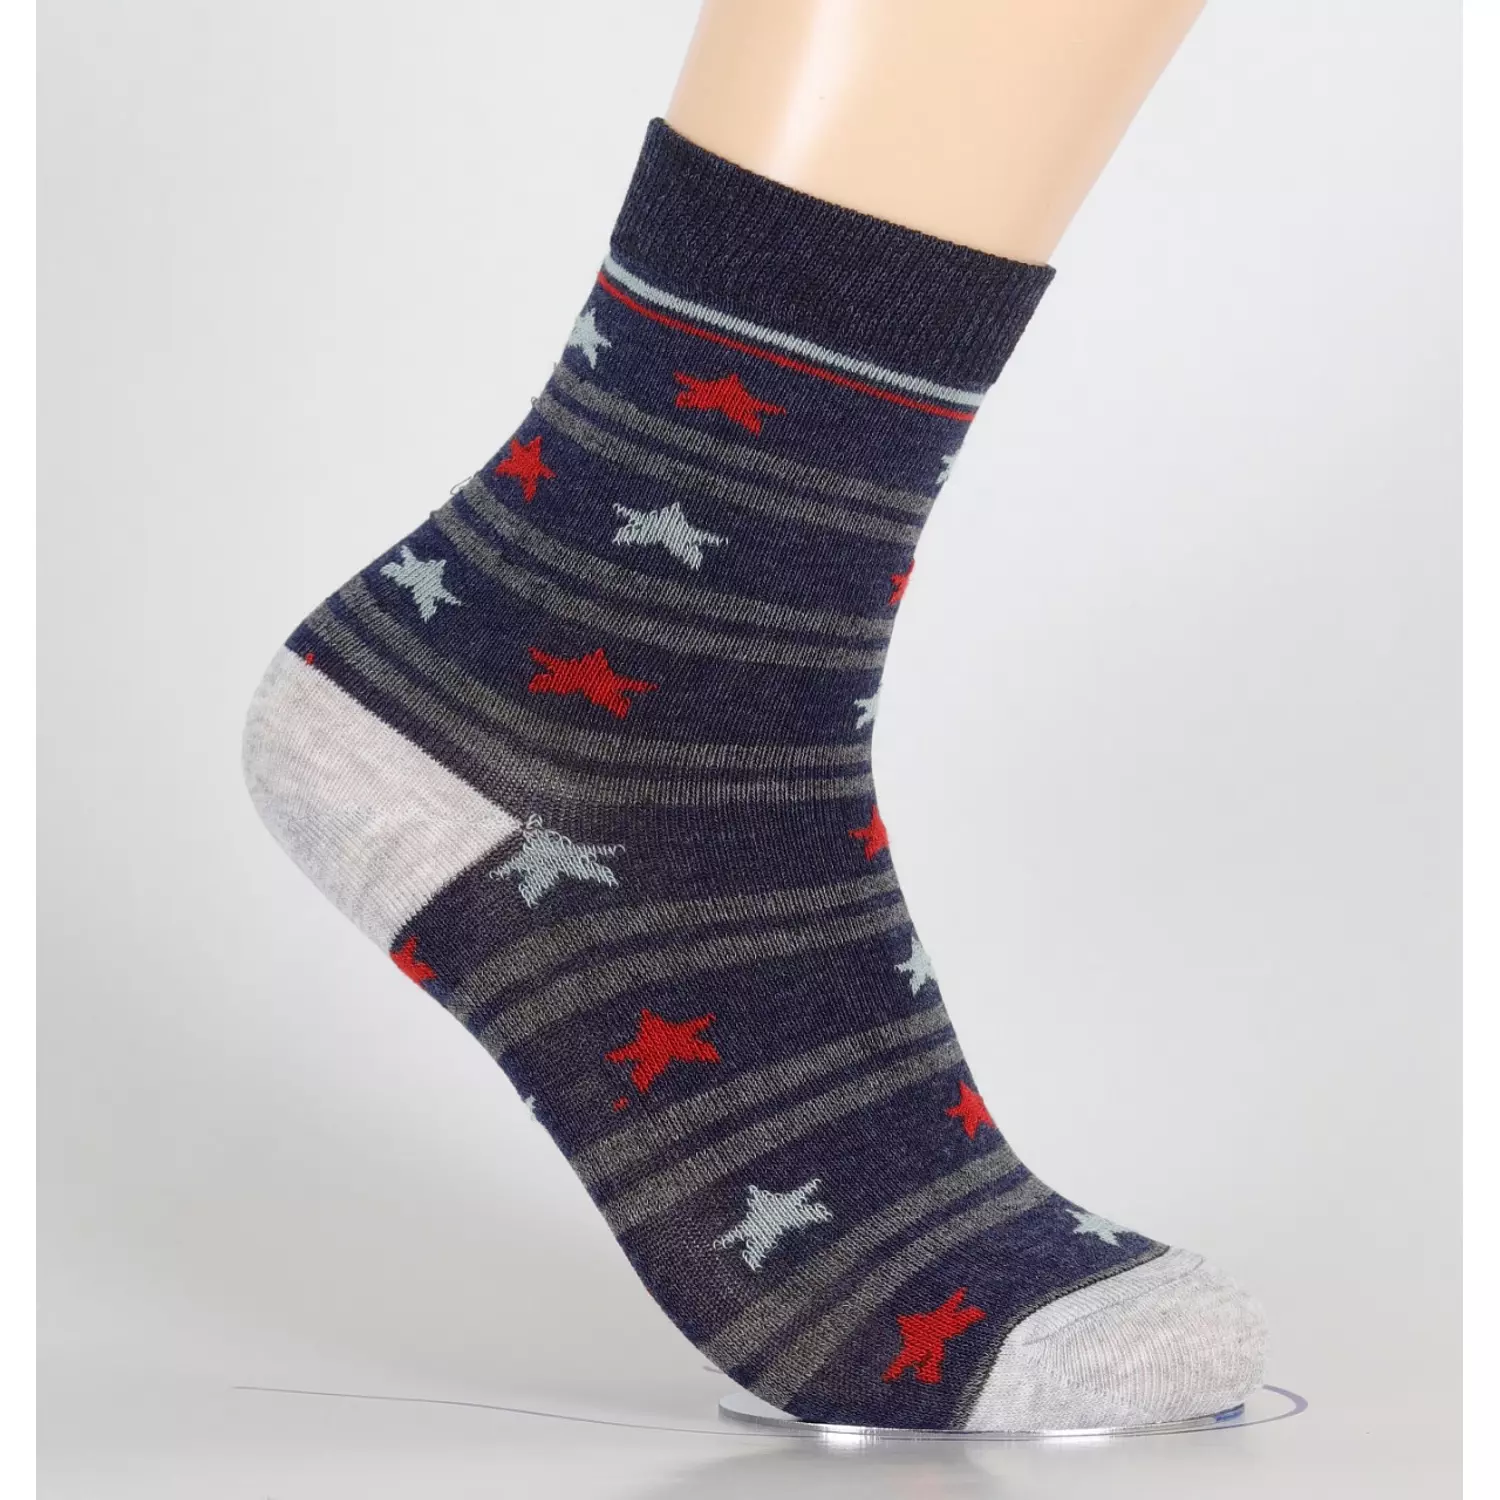 Viva kids Socks size 6-14 years hover image